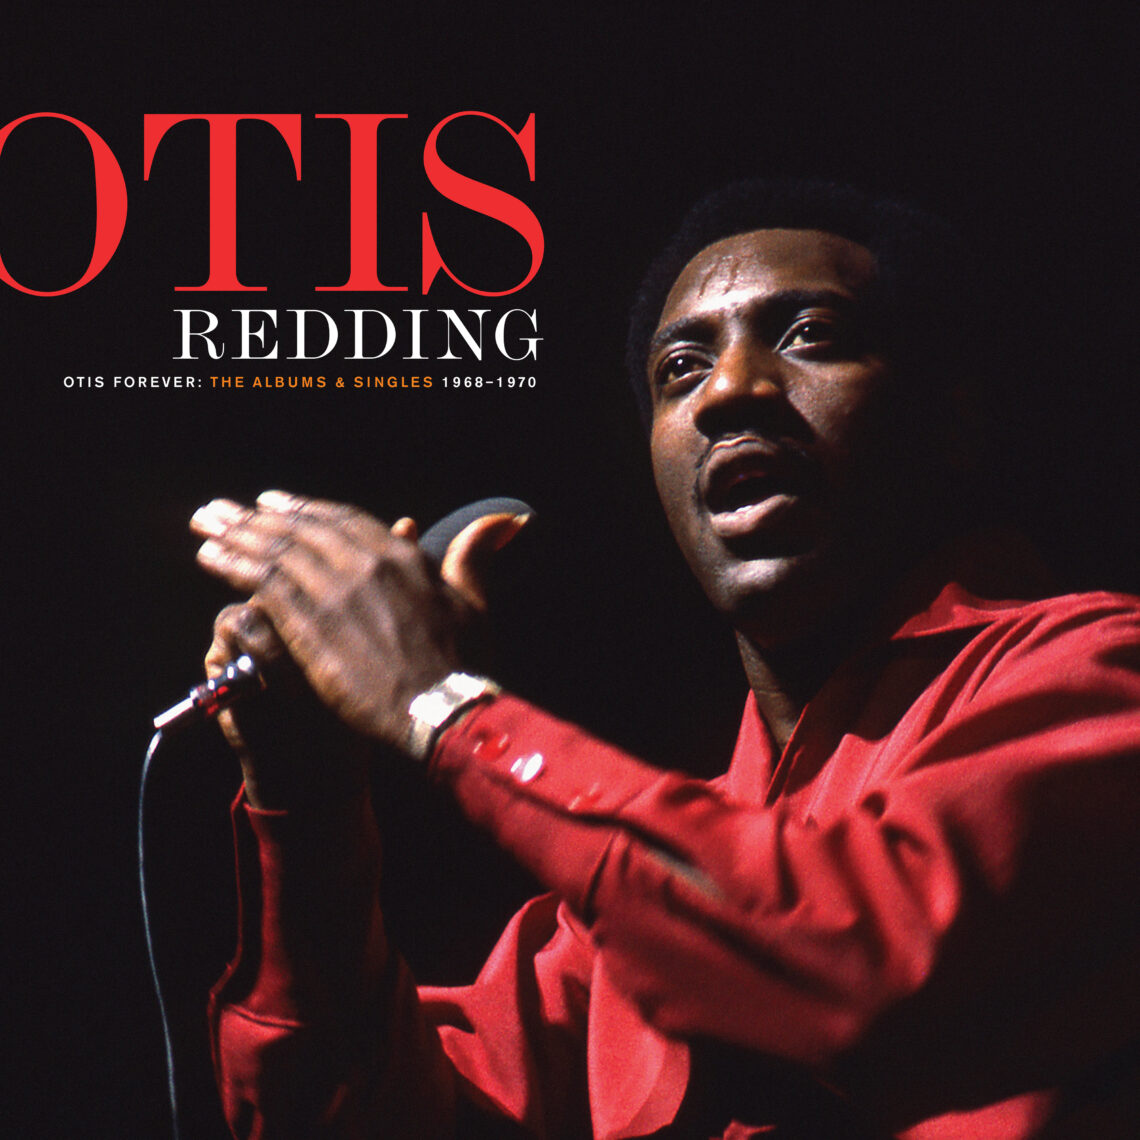 klap arsenal præambel Otis Redding Limited Vinyl Box Set Announced